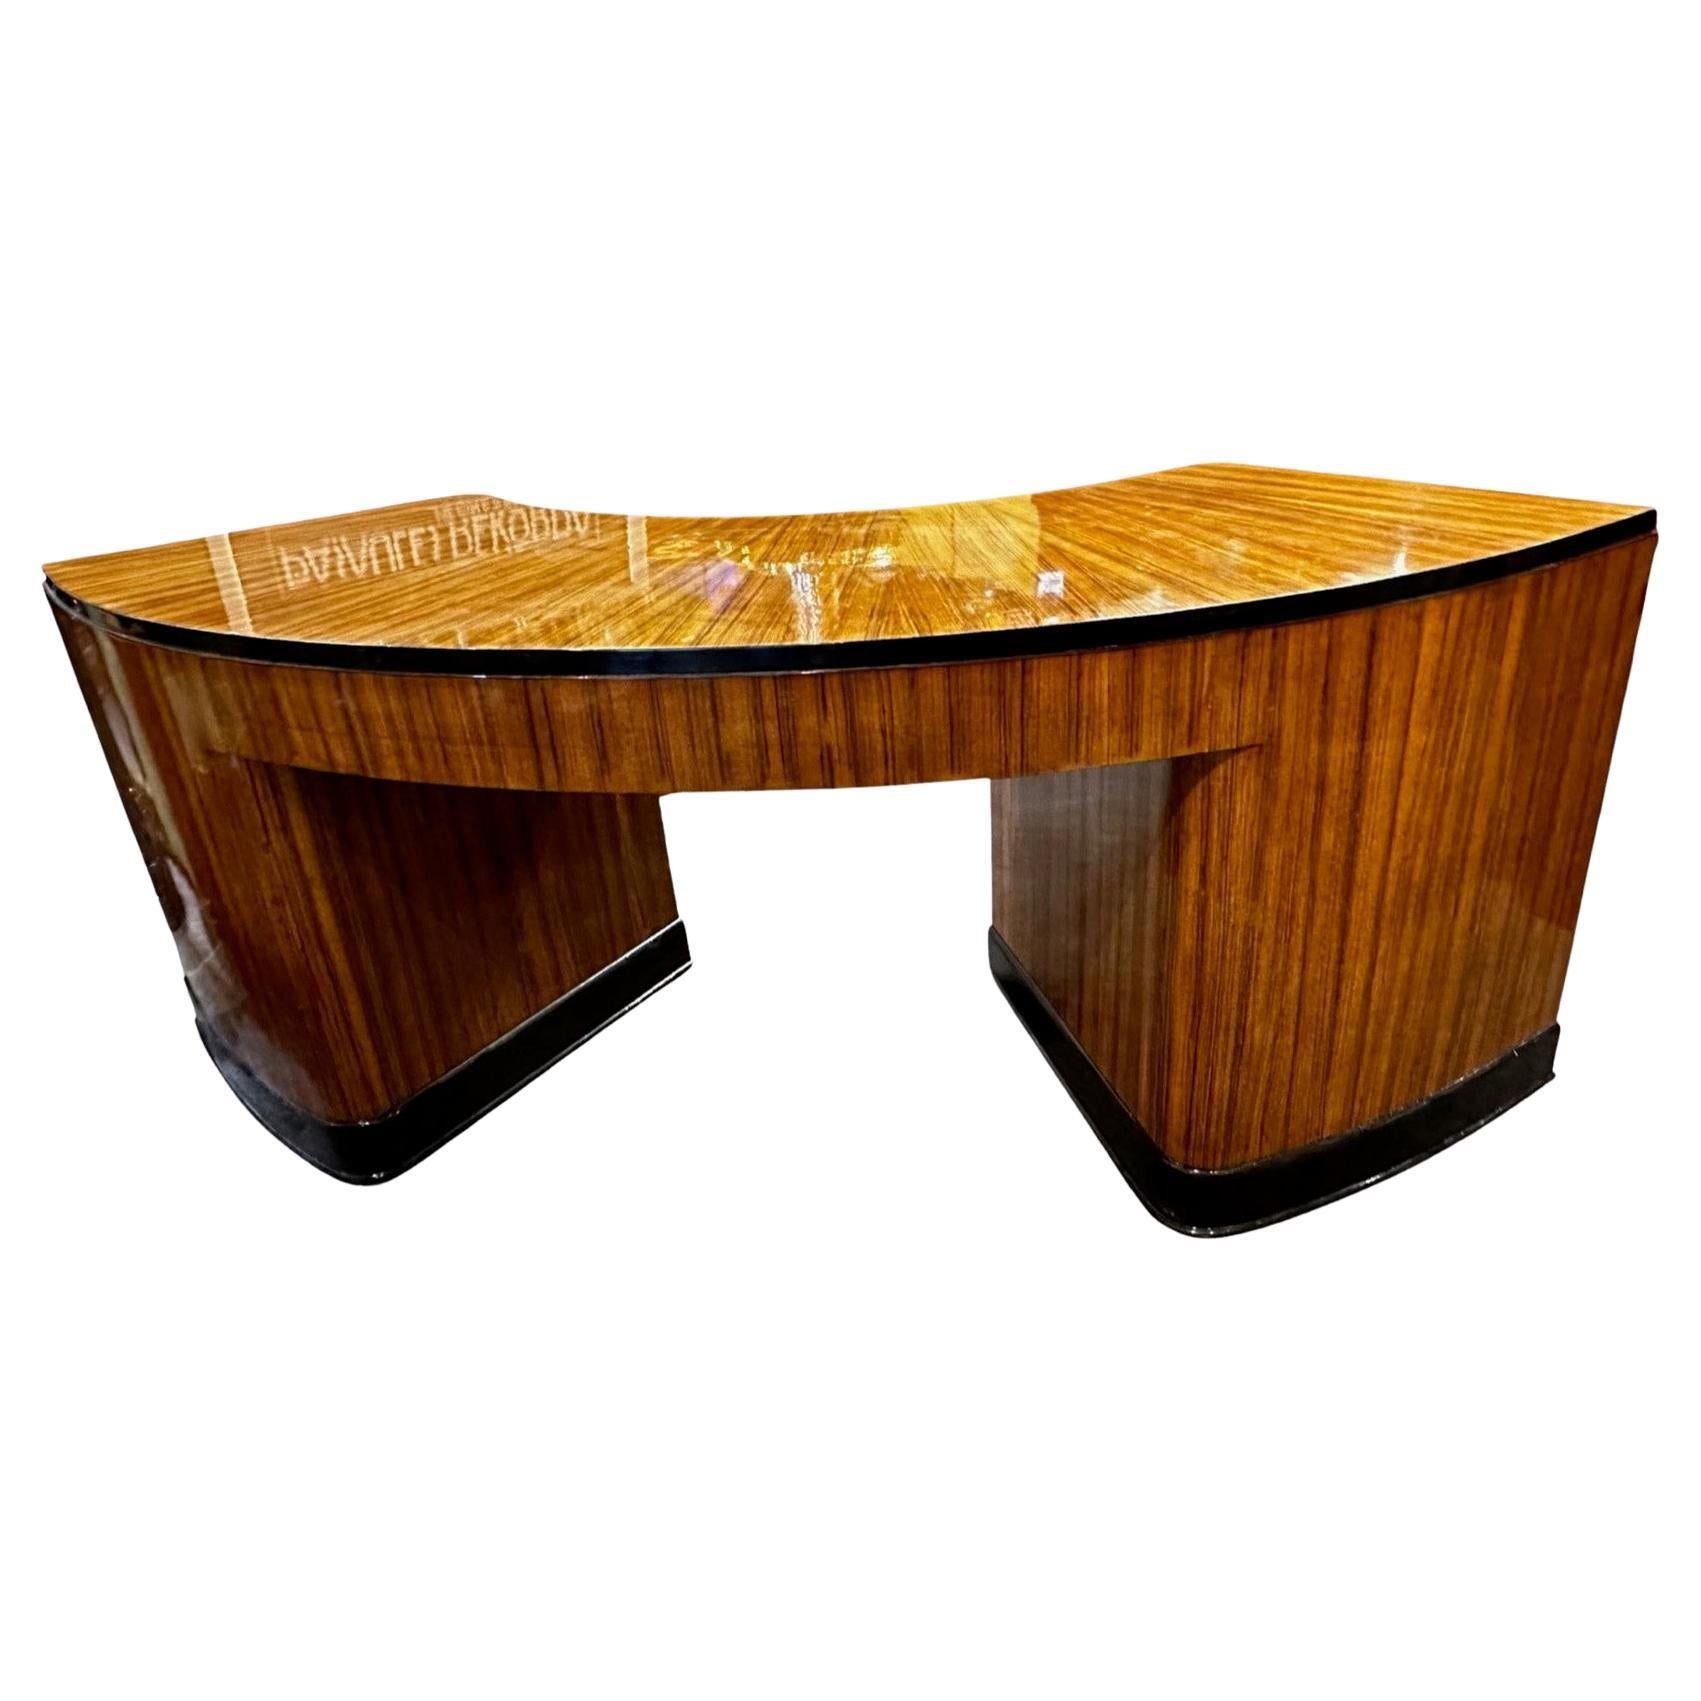 Executive Art Deco Professional Desk in Zebra Wood